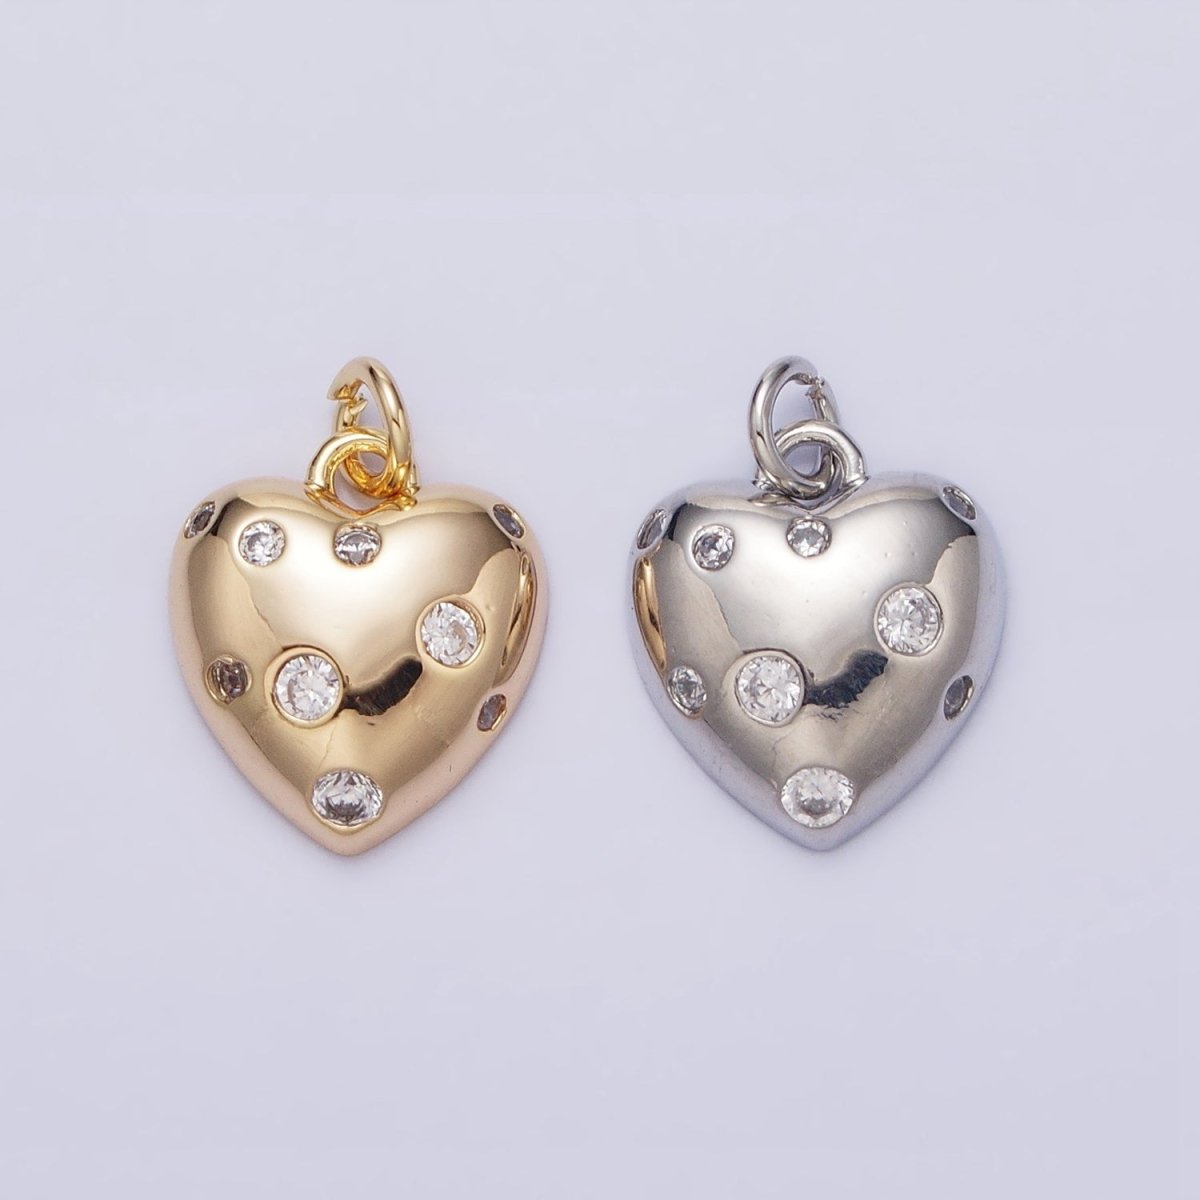 OS Mini Gold Heart Charm with CZ Stone Dots Bubble Love Valentine Jewelry Pendant AC508 AC509 - DLUXCA